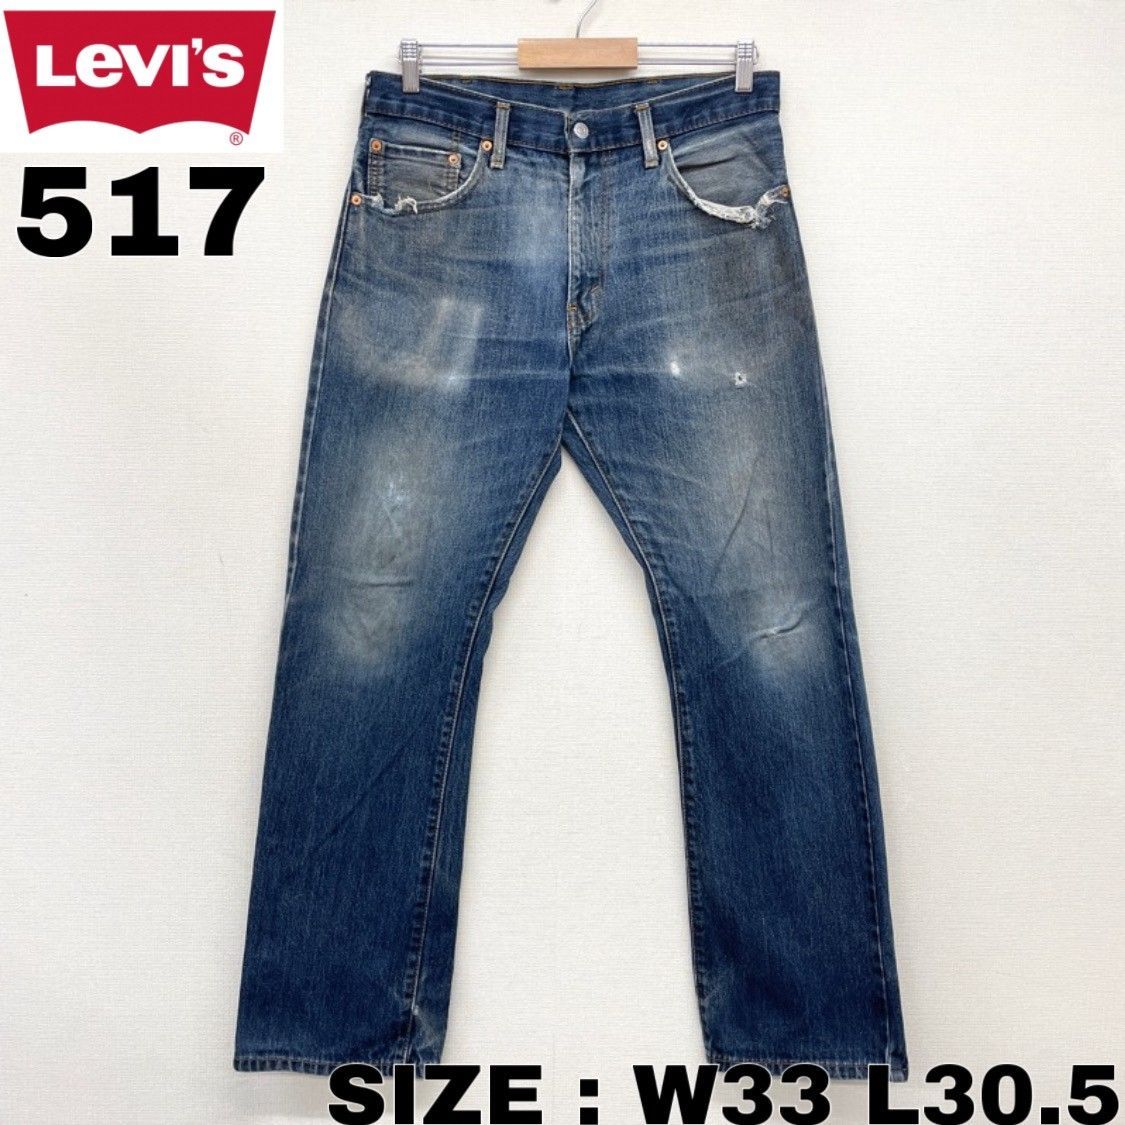 Levi's 517 DENIM PANTS USA 1979s W33 L34